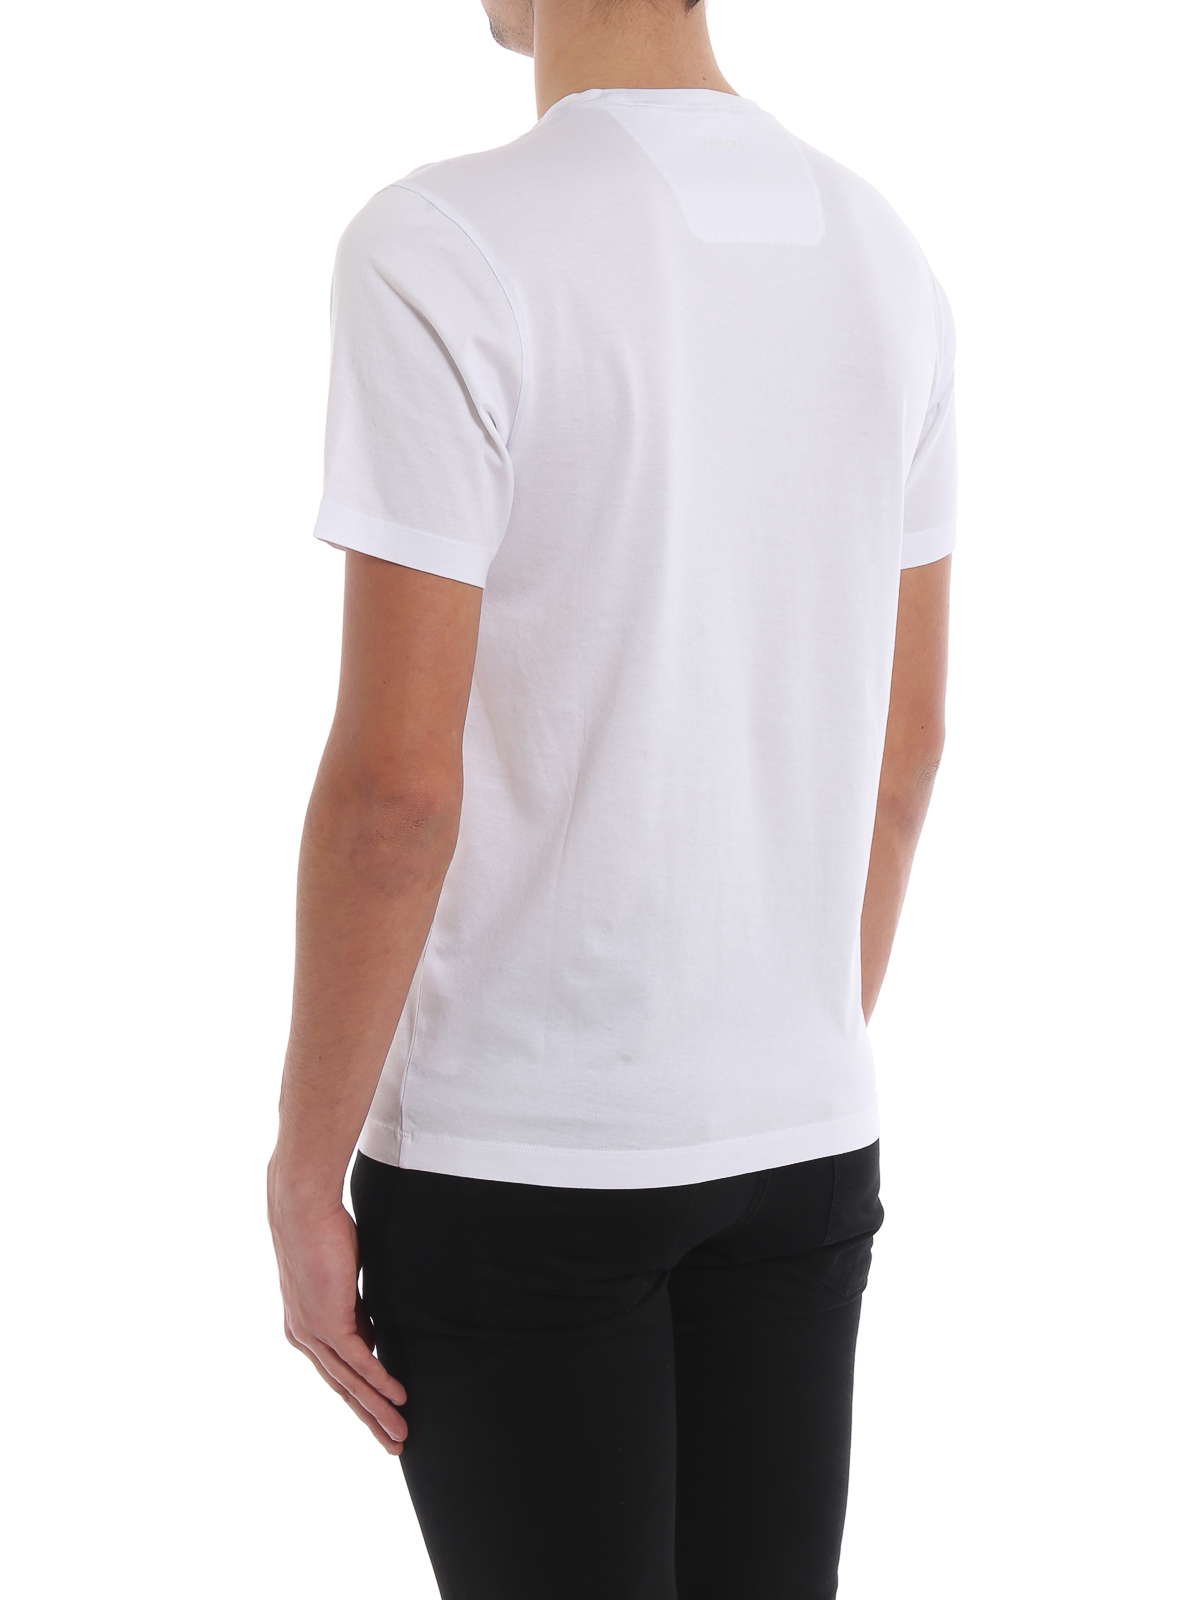 T-shirts Z Zegna - Shaded logo print white T-shirt - VS372ZZ630A6A1